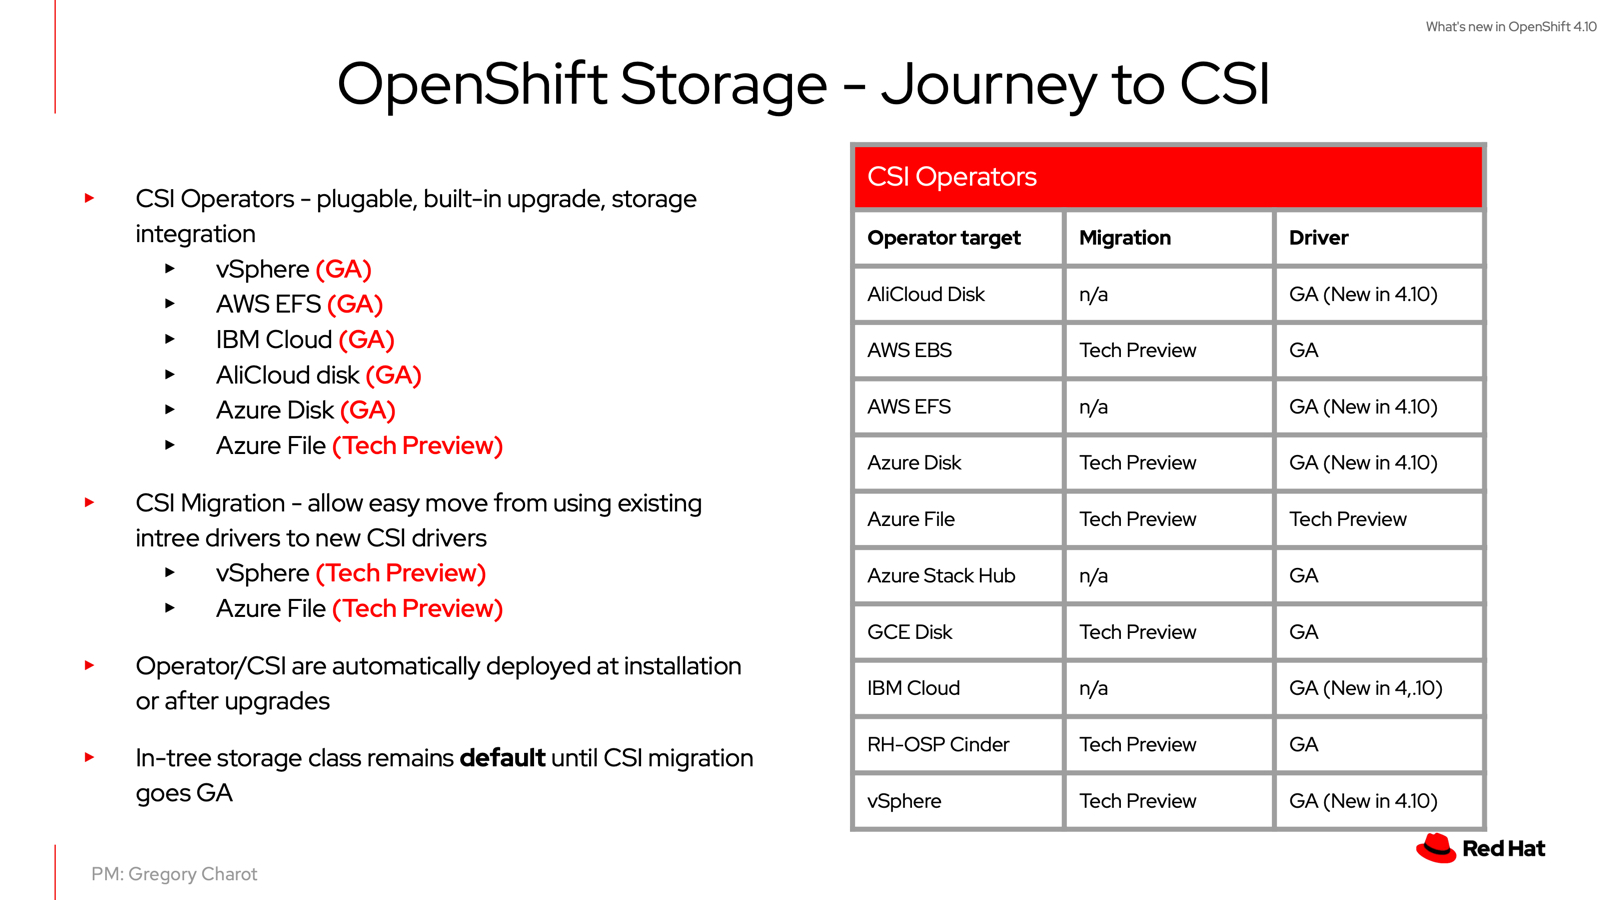 OpenShift Storage - Journey to CSI